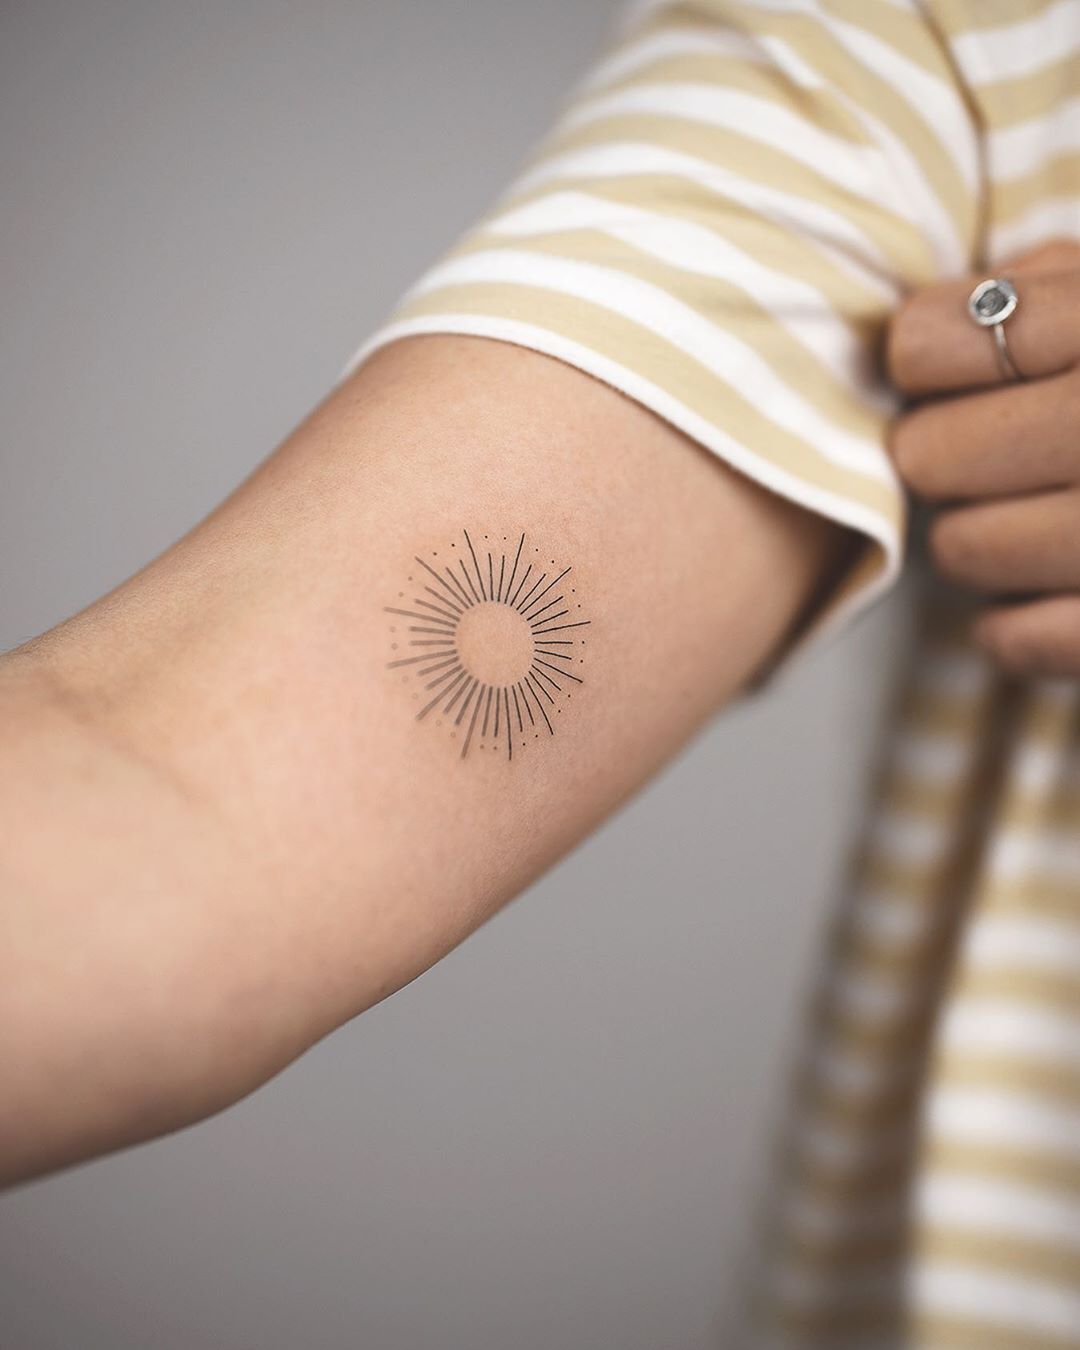 Sunshine tattoo by Rey Jasper